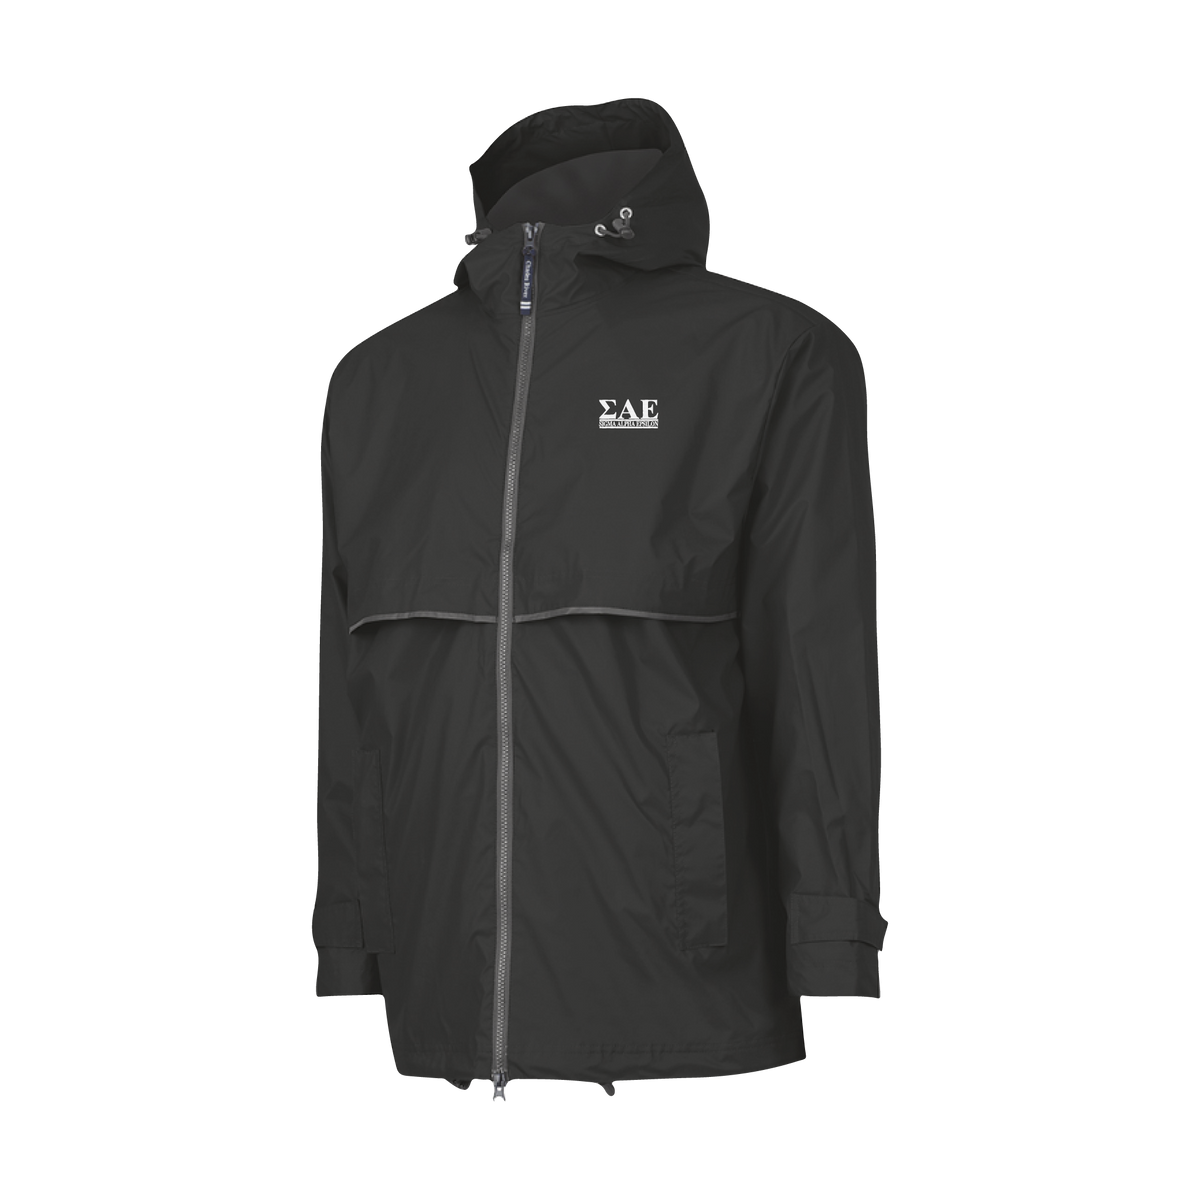 B-Unlimited Greek - Rain Jacket (SAE) - Charles River - 9199 - New Englander Rain Jacket - Black